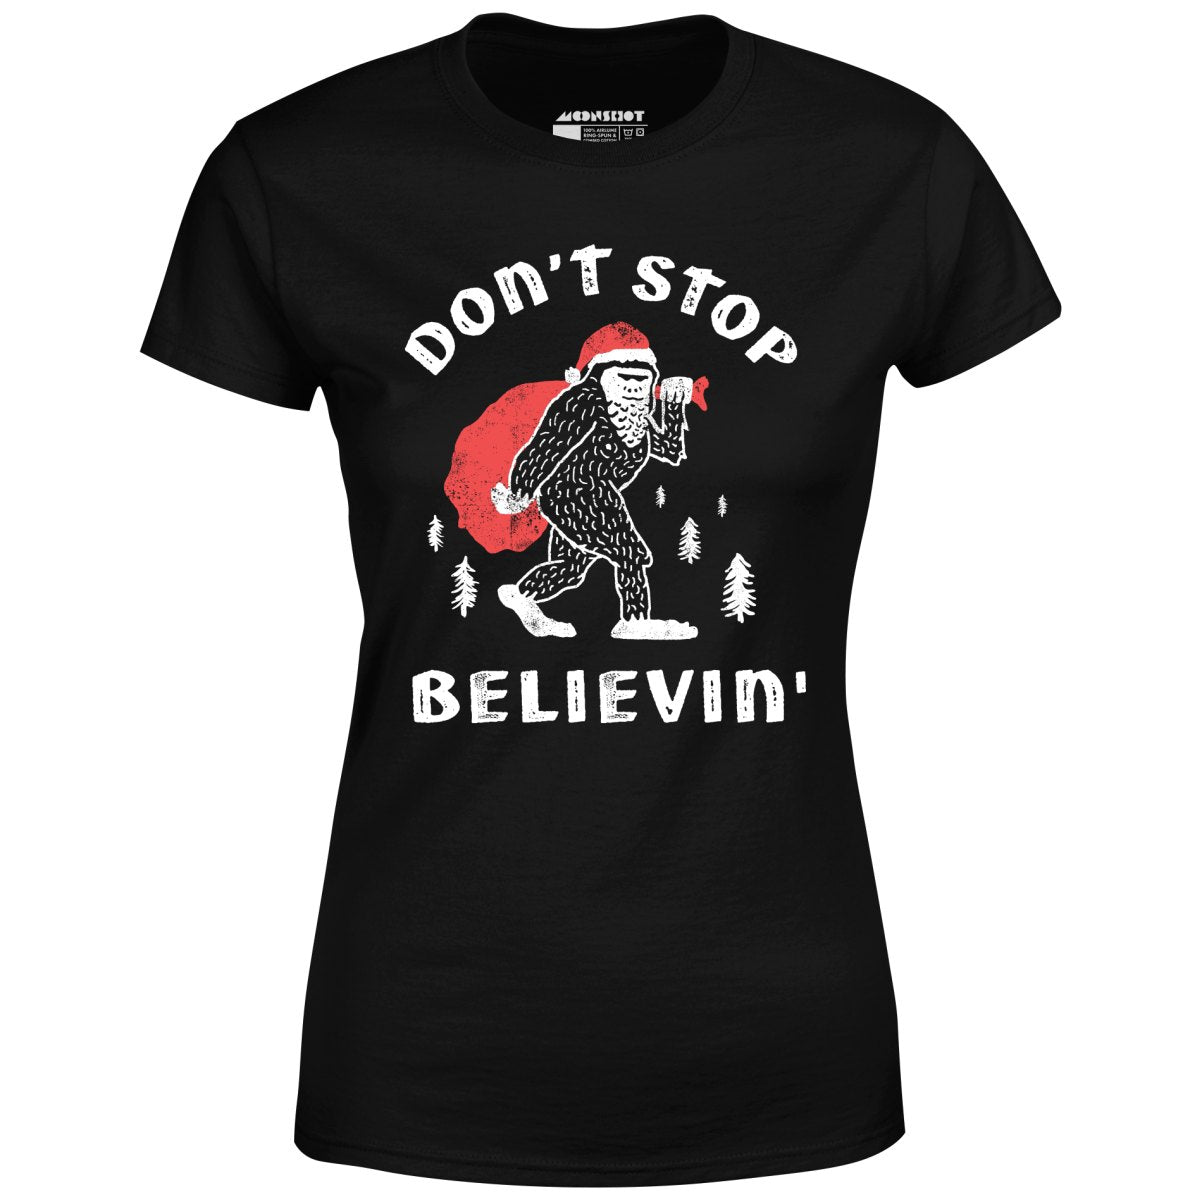 Don't Stop Believin' - Women's T-Shirt